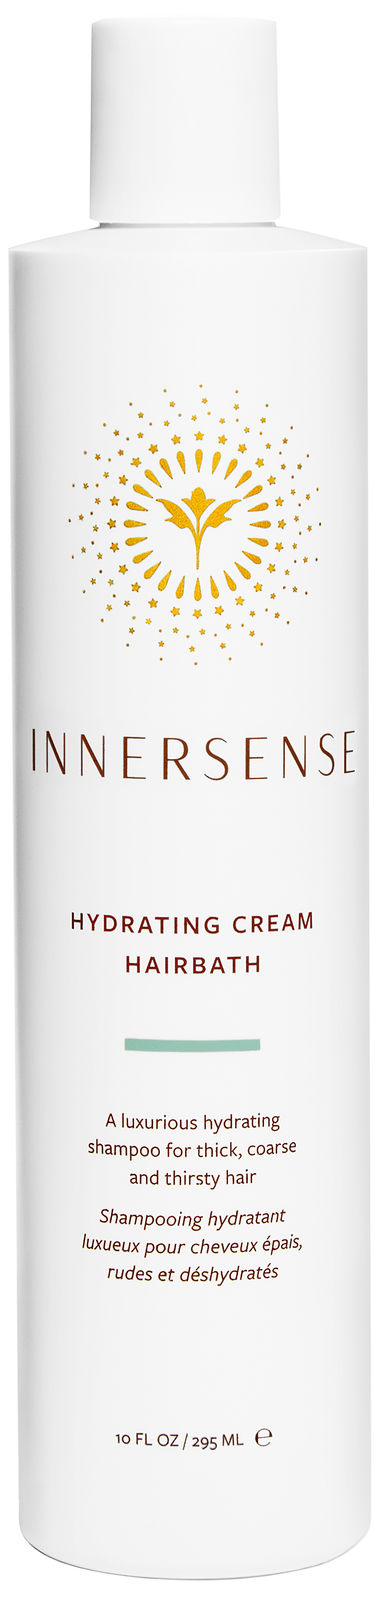 Innersense Hydrating Cream Hairbath 295ml